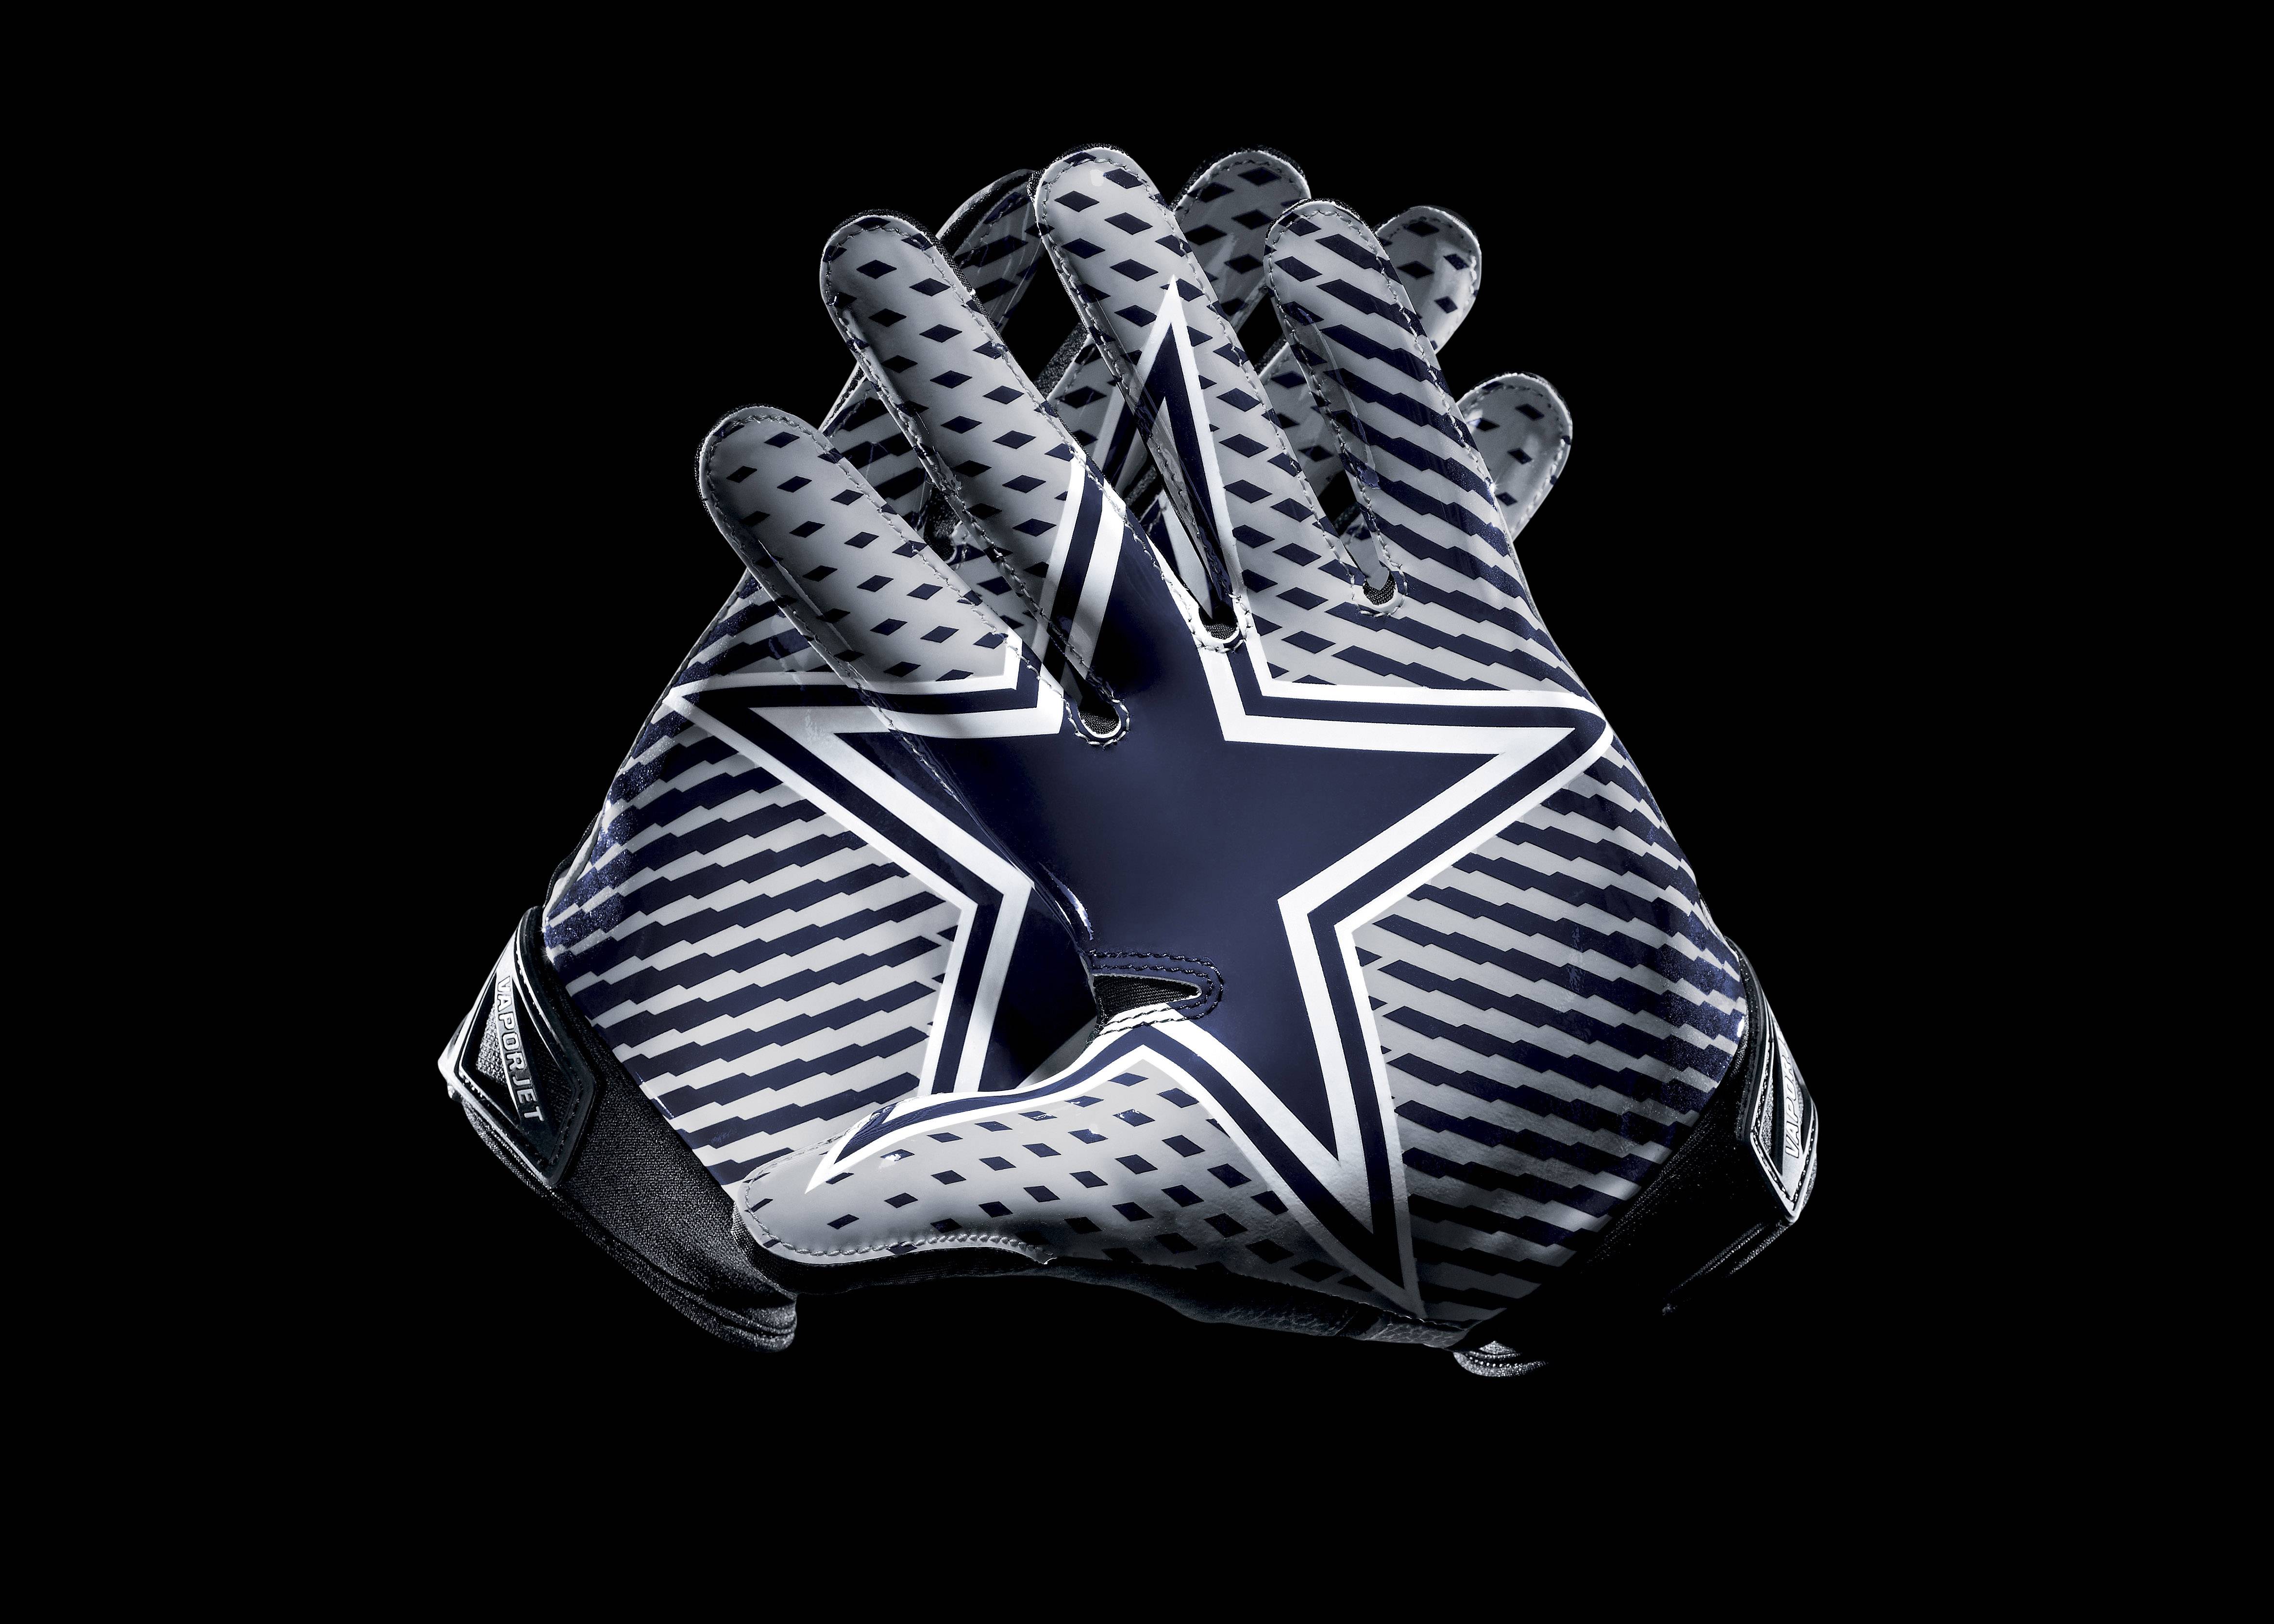 Dallas Cowboys Gloves Wallpaper 52895 4683x3345 px